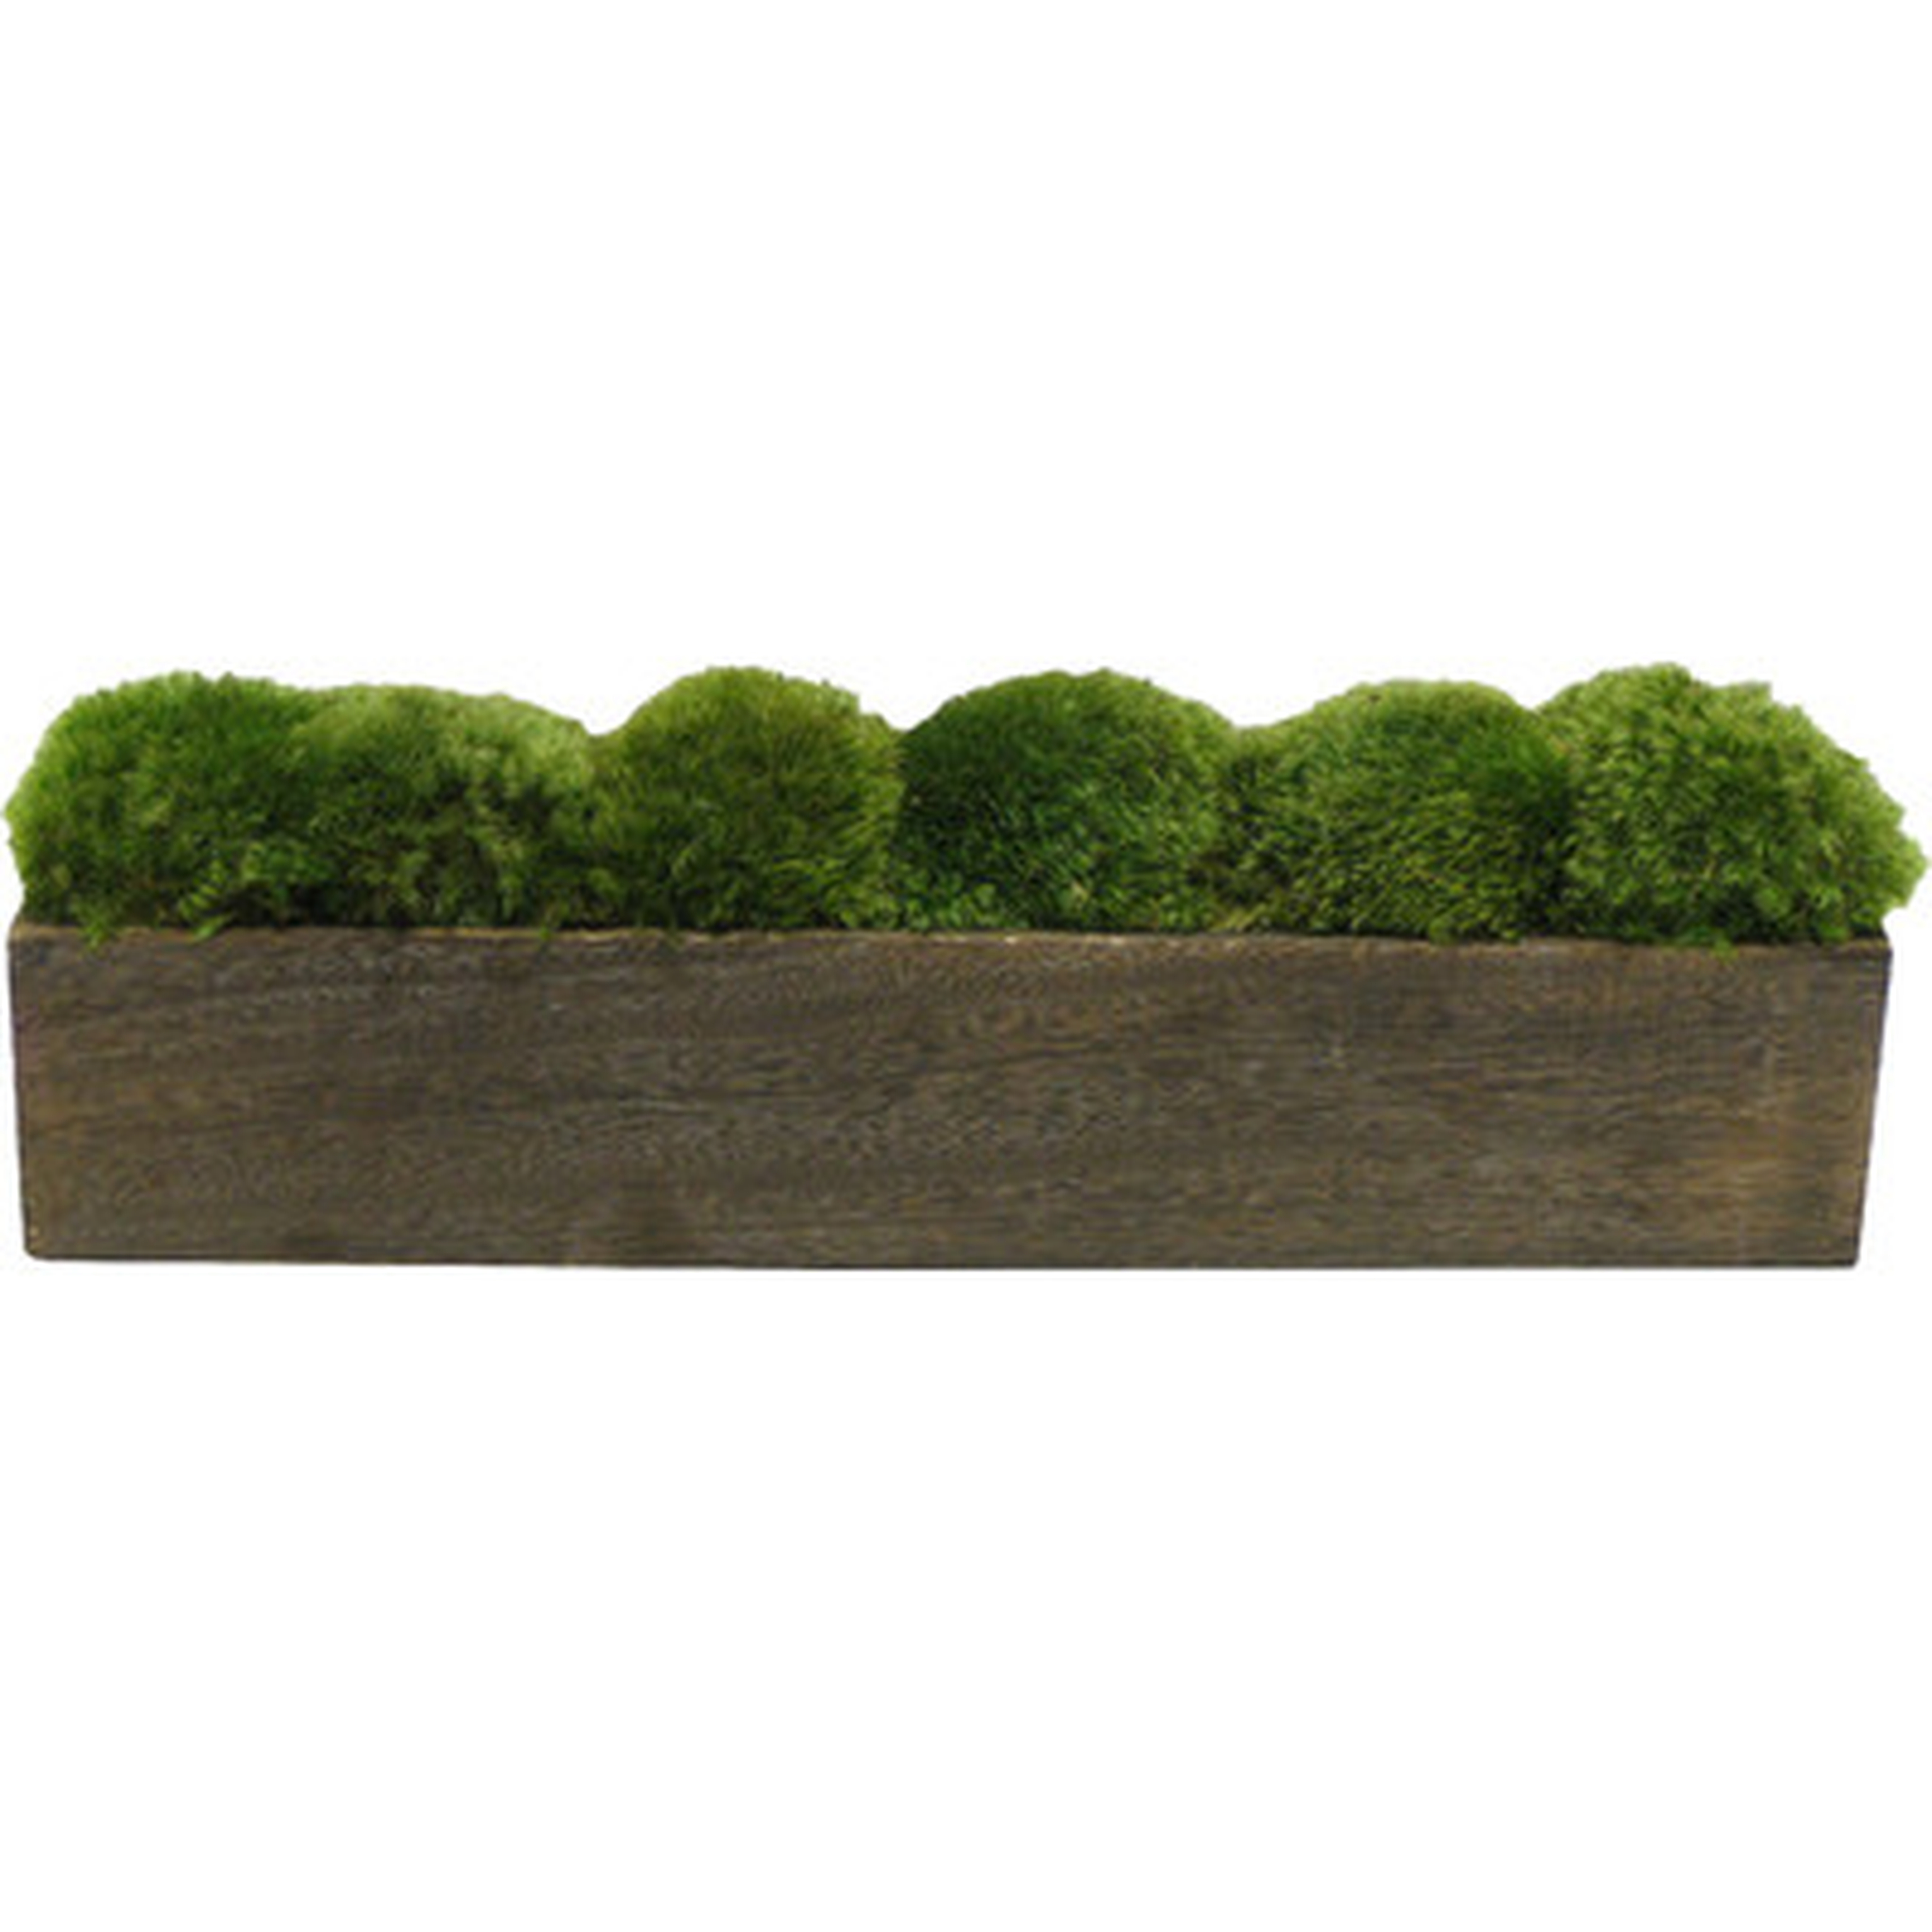 Moss in Planter - Wayfair